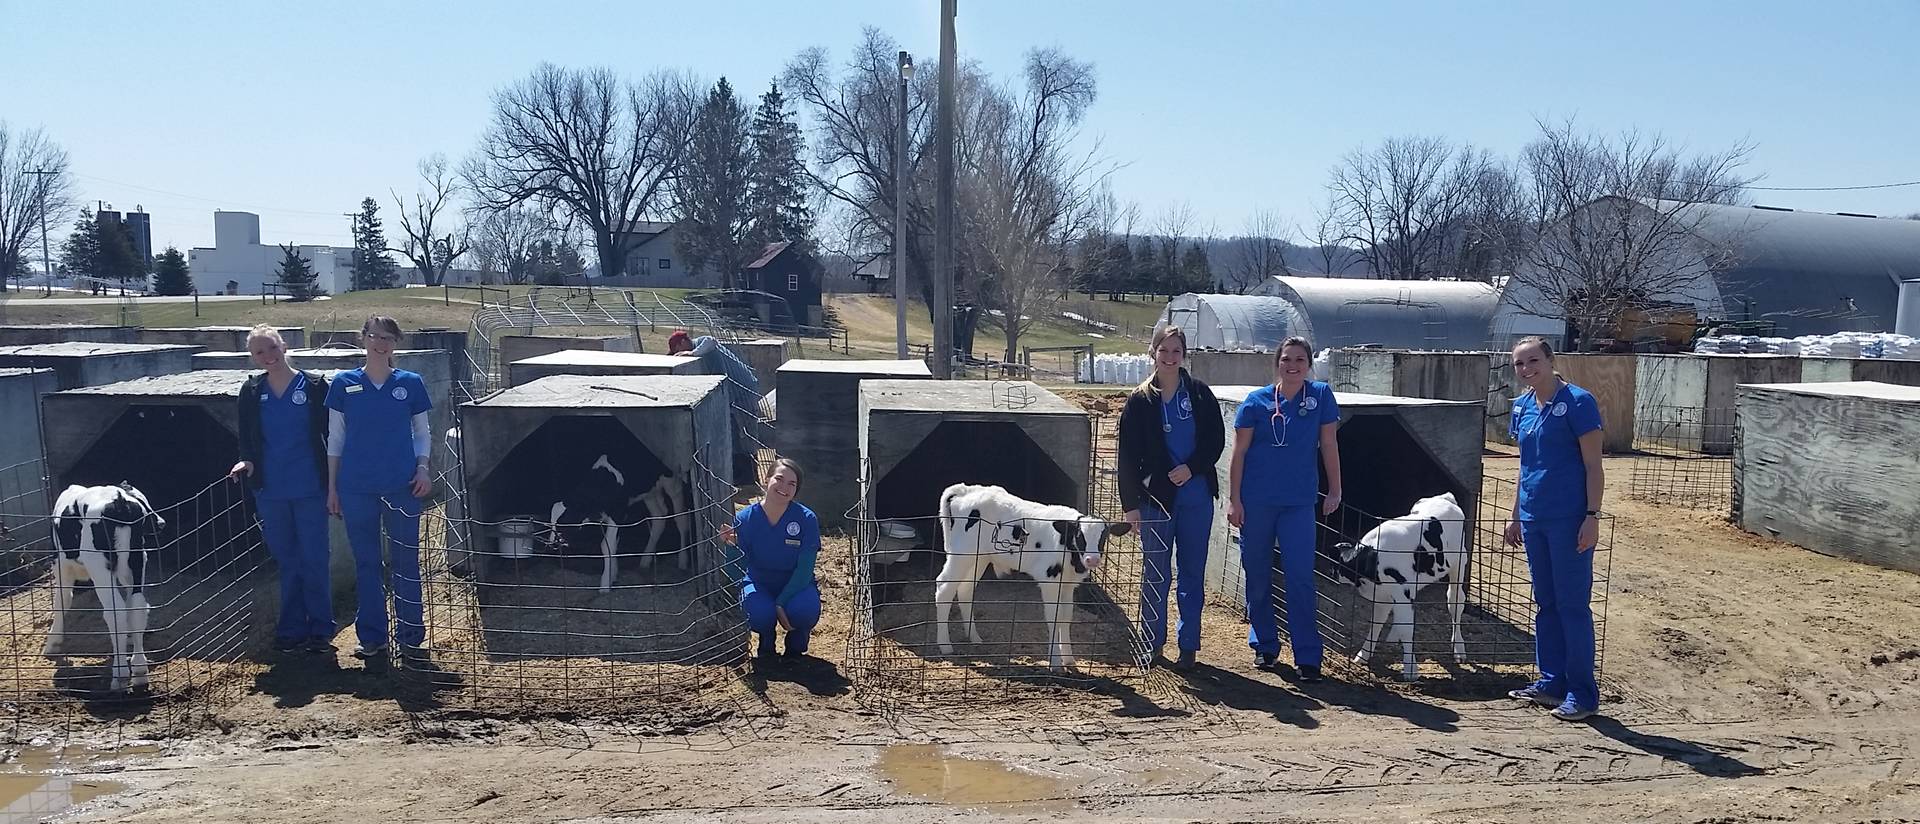 Dairy farm and nursing students 2018